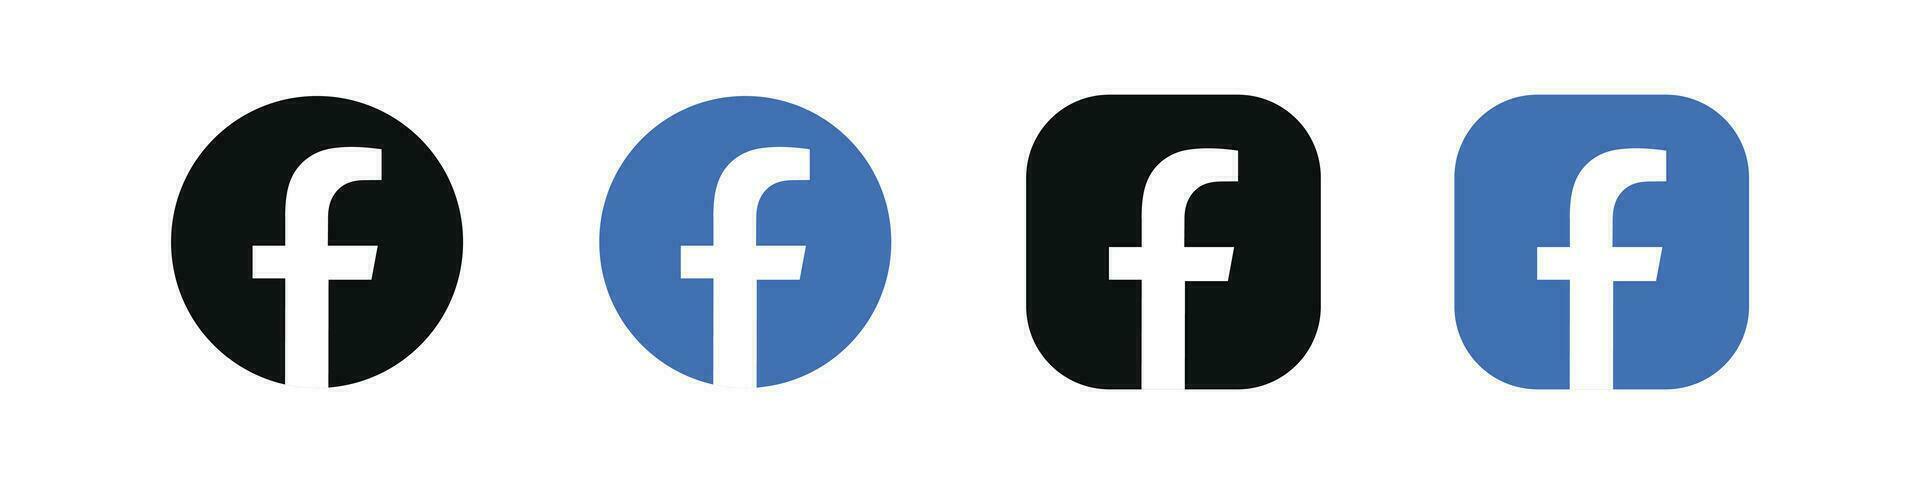 Facebook iconos Facebook logo. Facebook plano íconos aislado en blanco antecedentes. Facebook vector logo icono colocar.